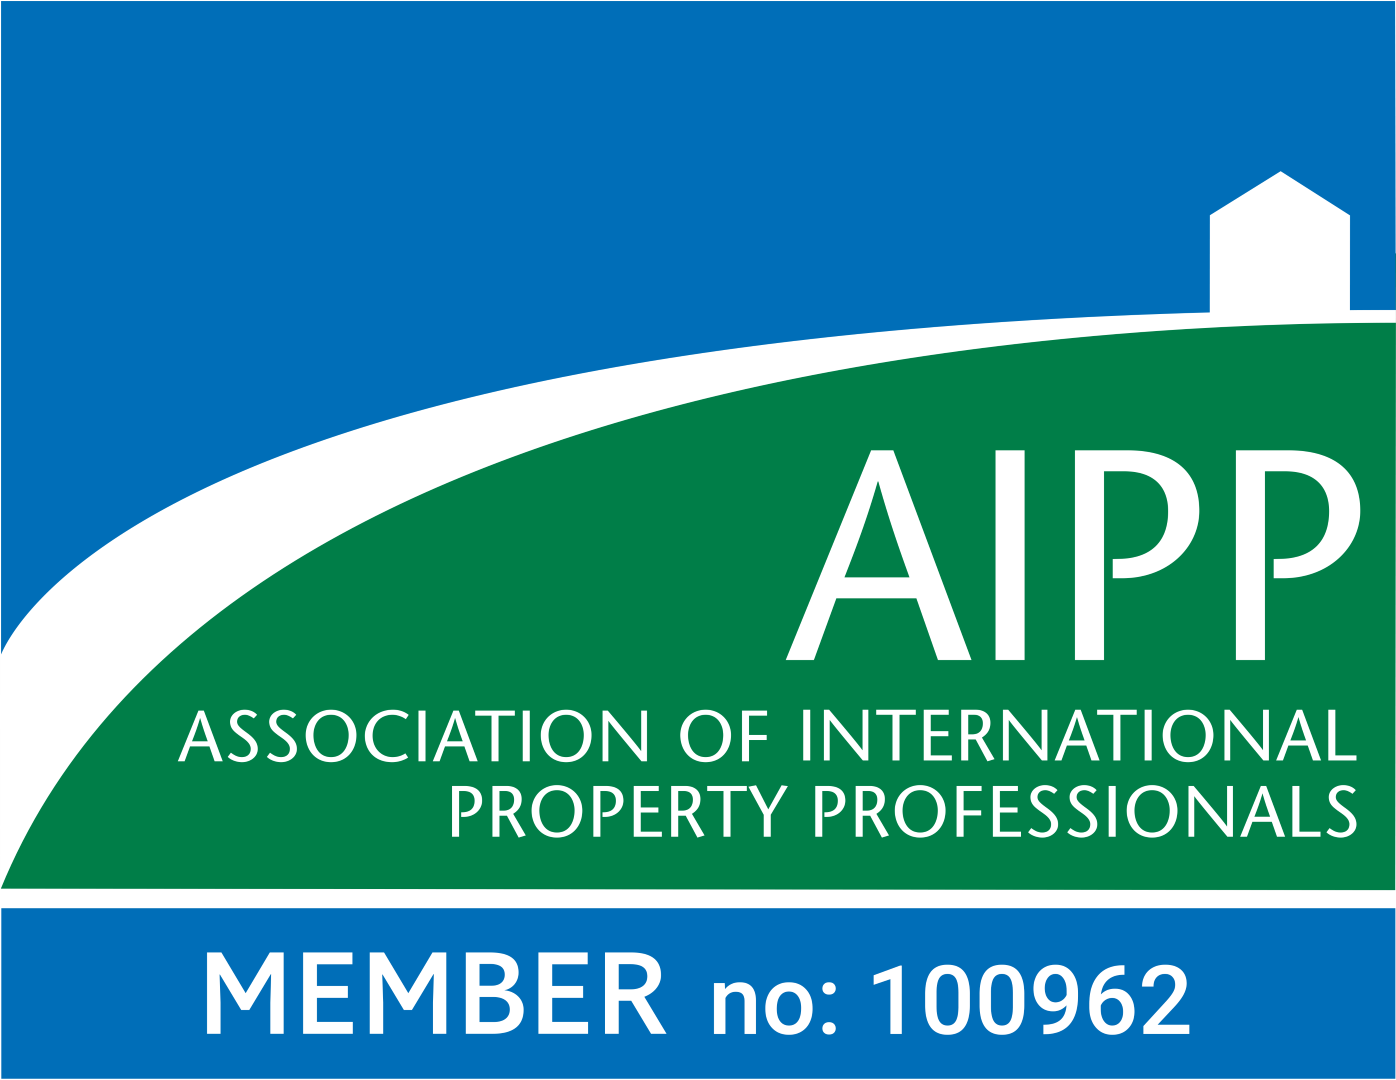 Logo AIPP